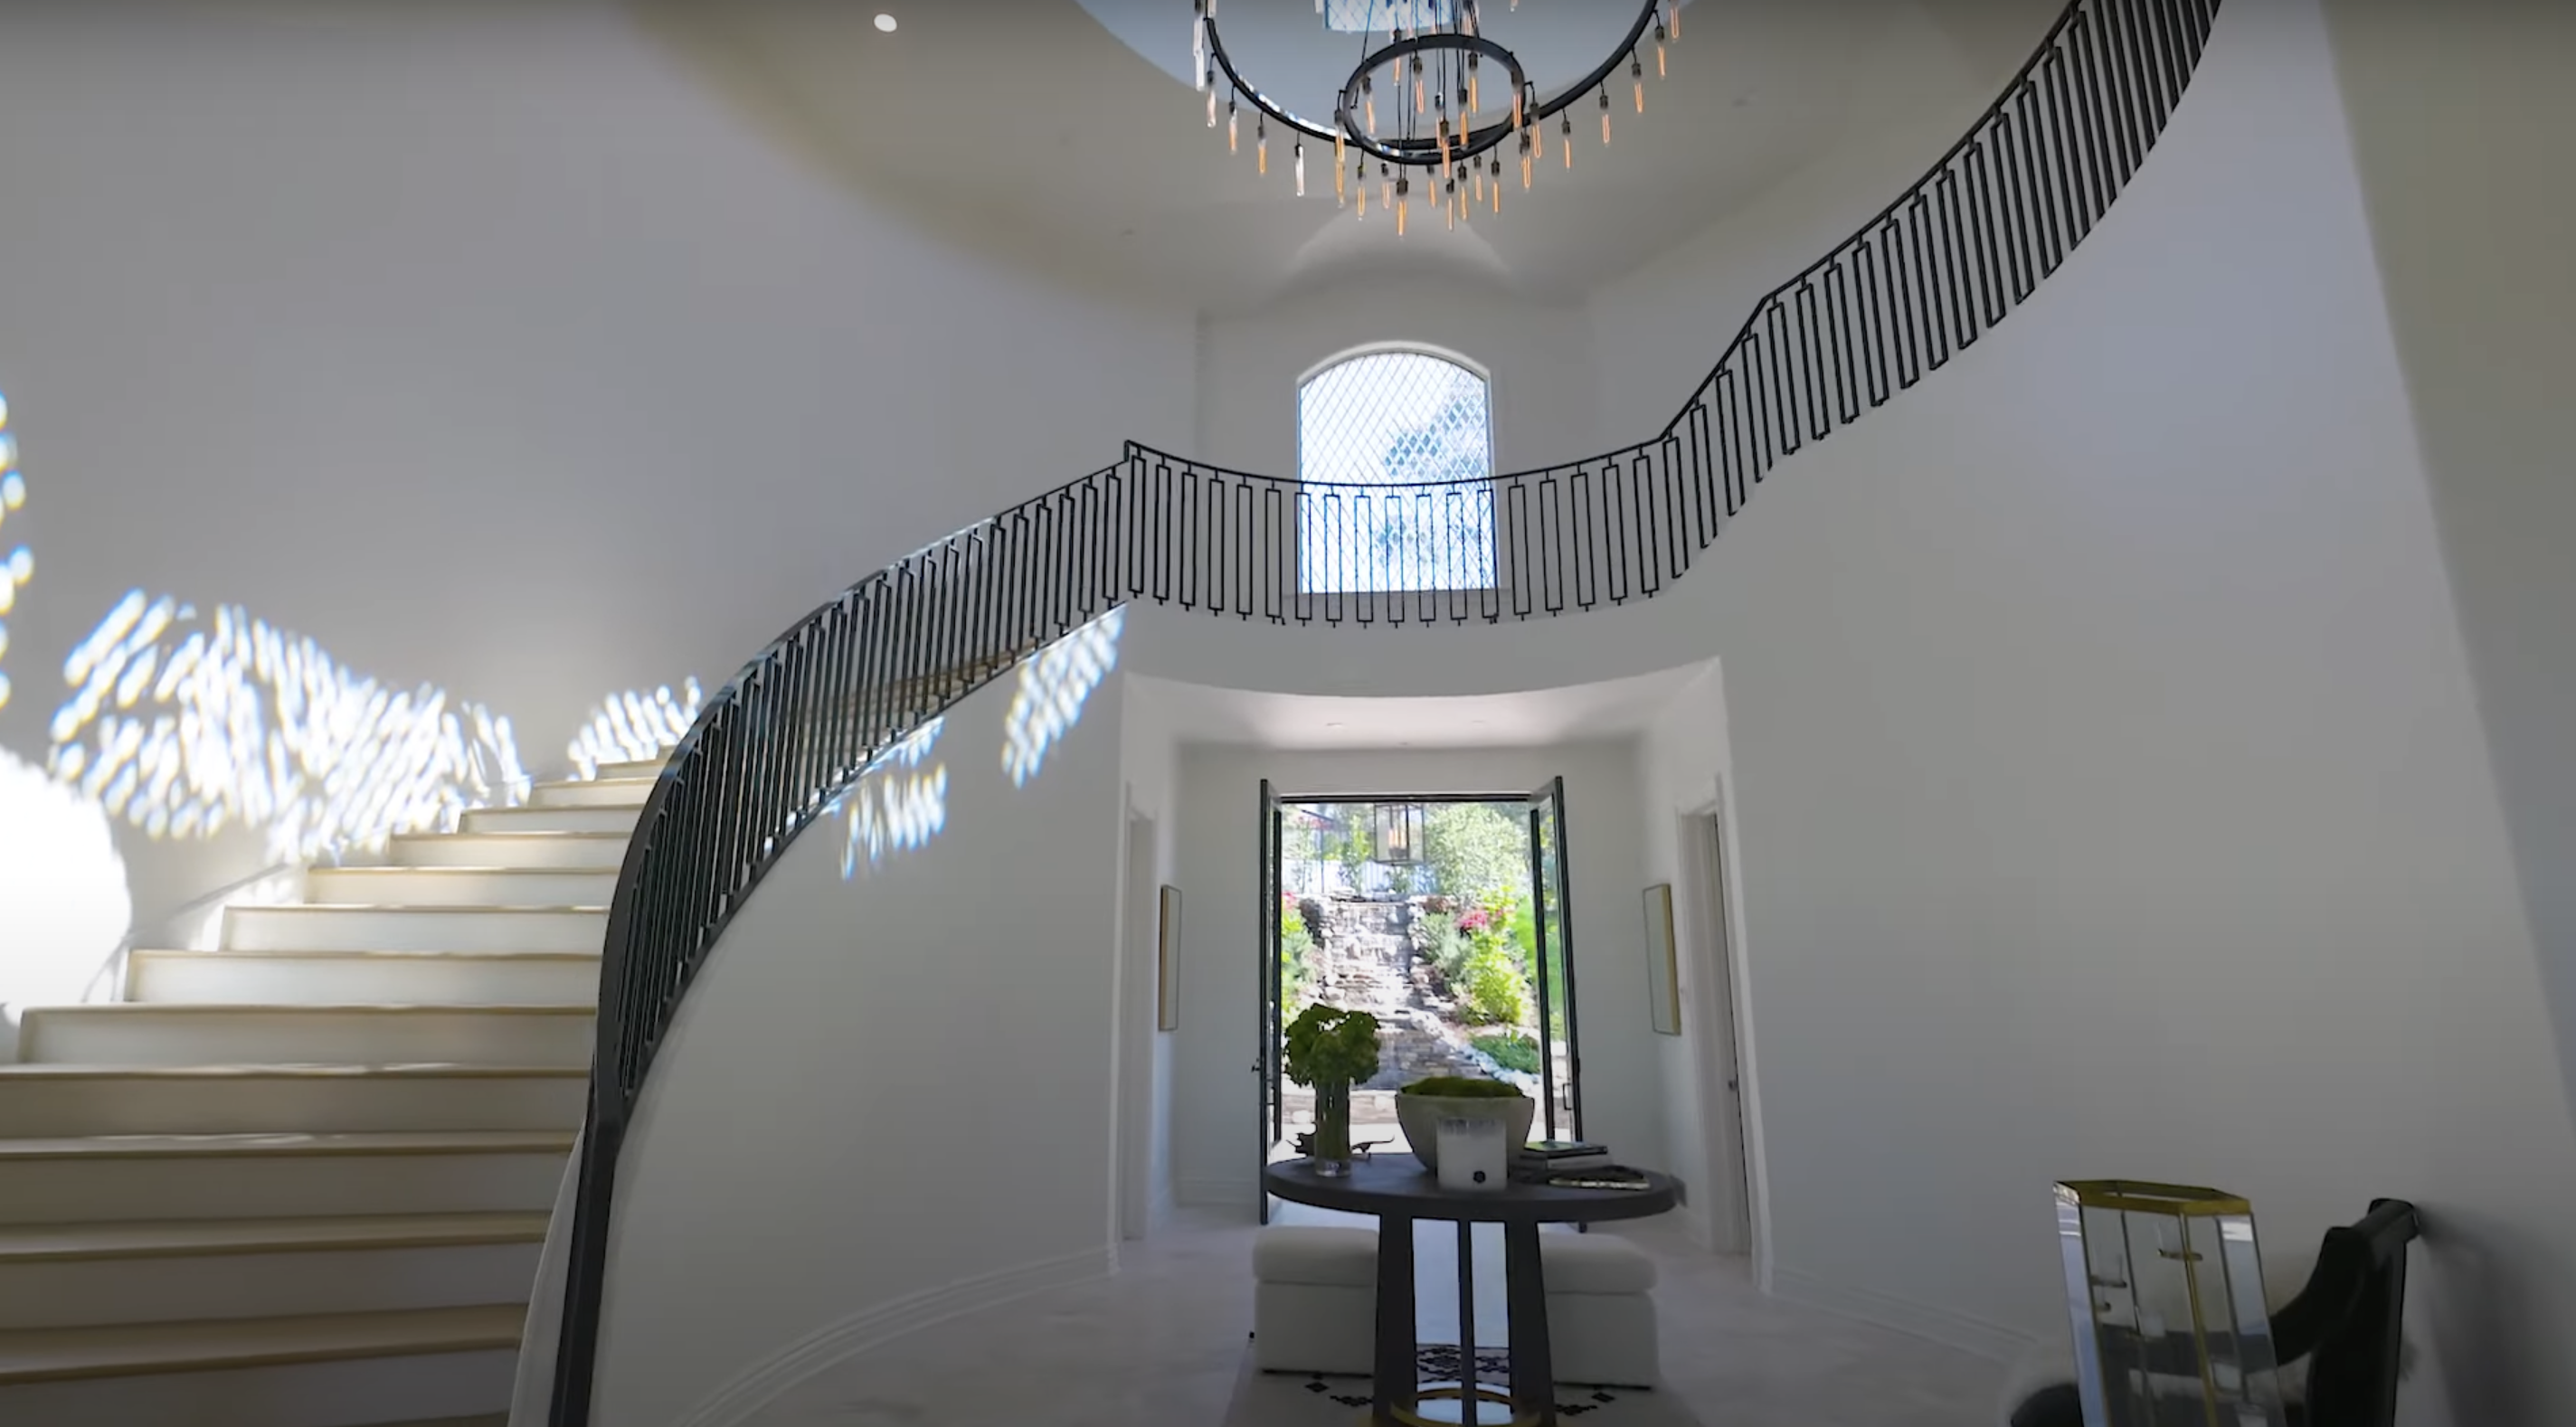 Cameron Diaz's Montecito, California home on April 14, 2022 | Source: YouTube/Cristal Clarke